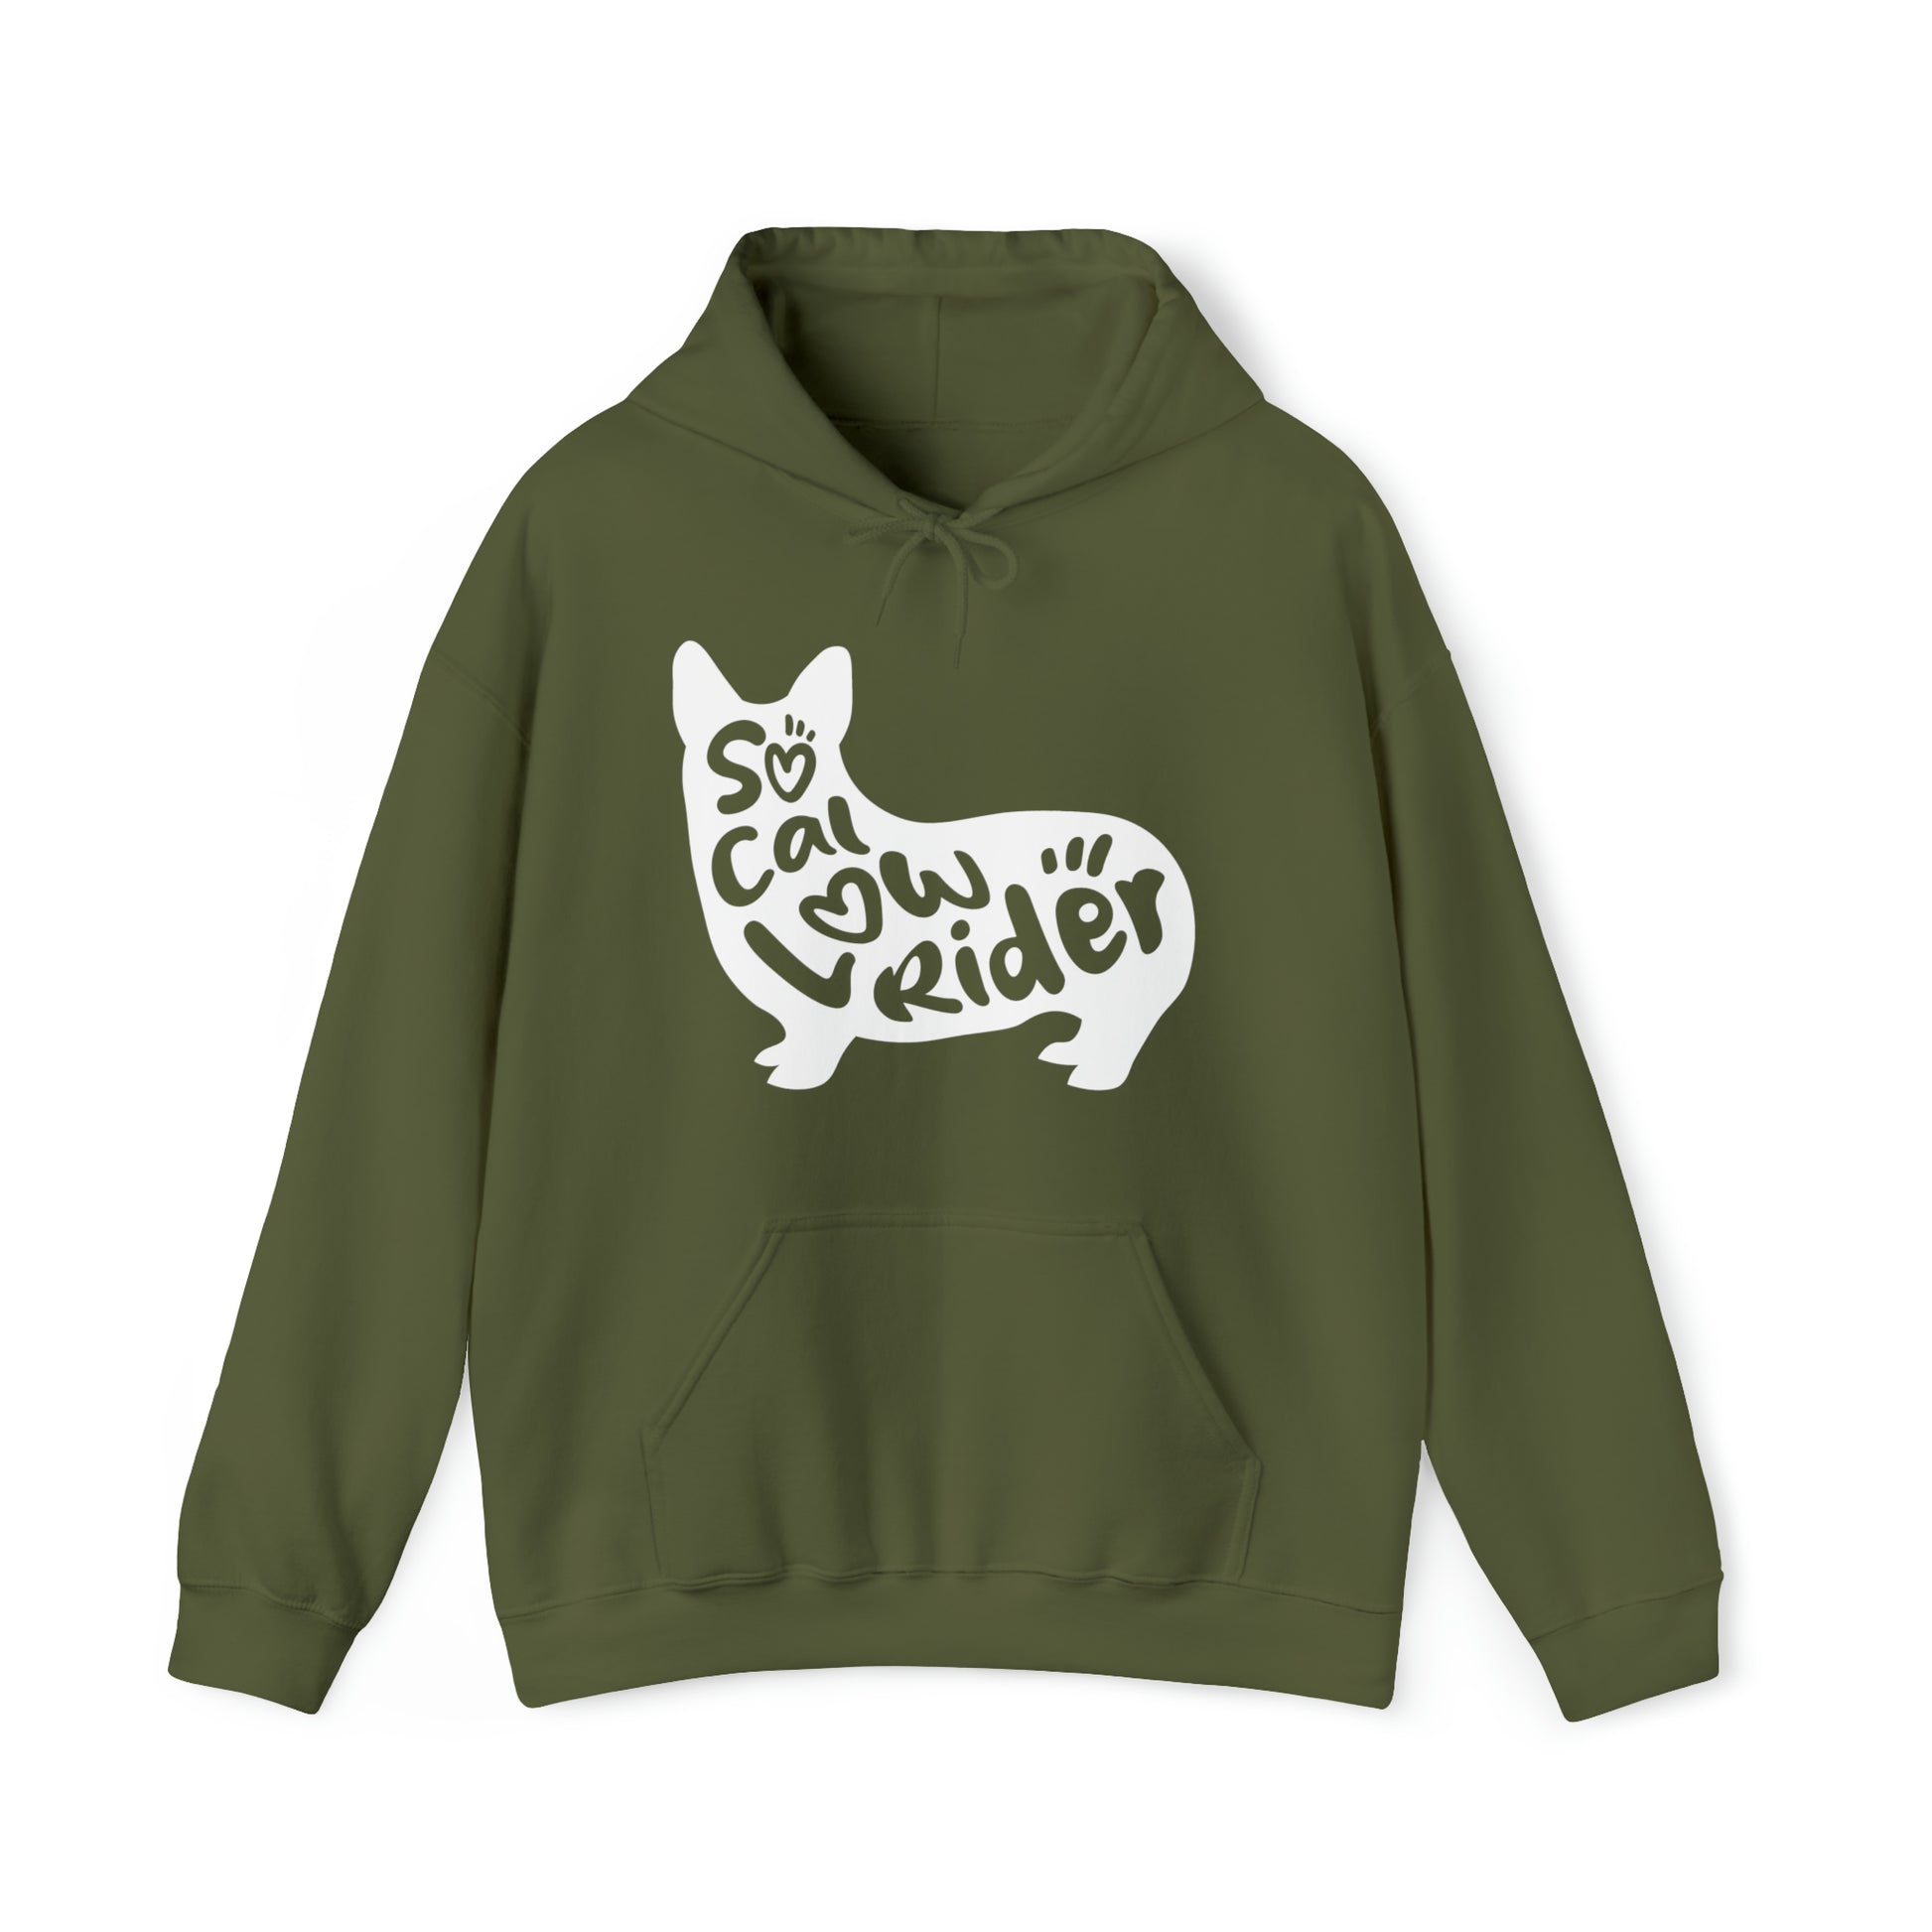 green olive army SoCal LowRider Southern California corgi dog hoodie sweatshirt